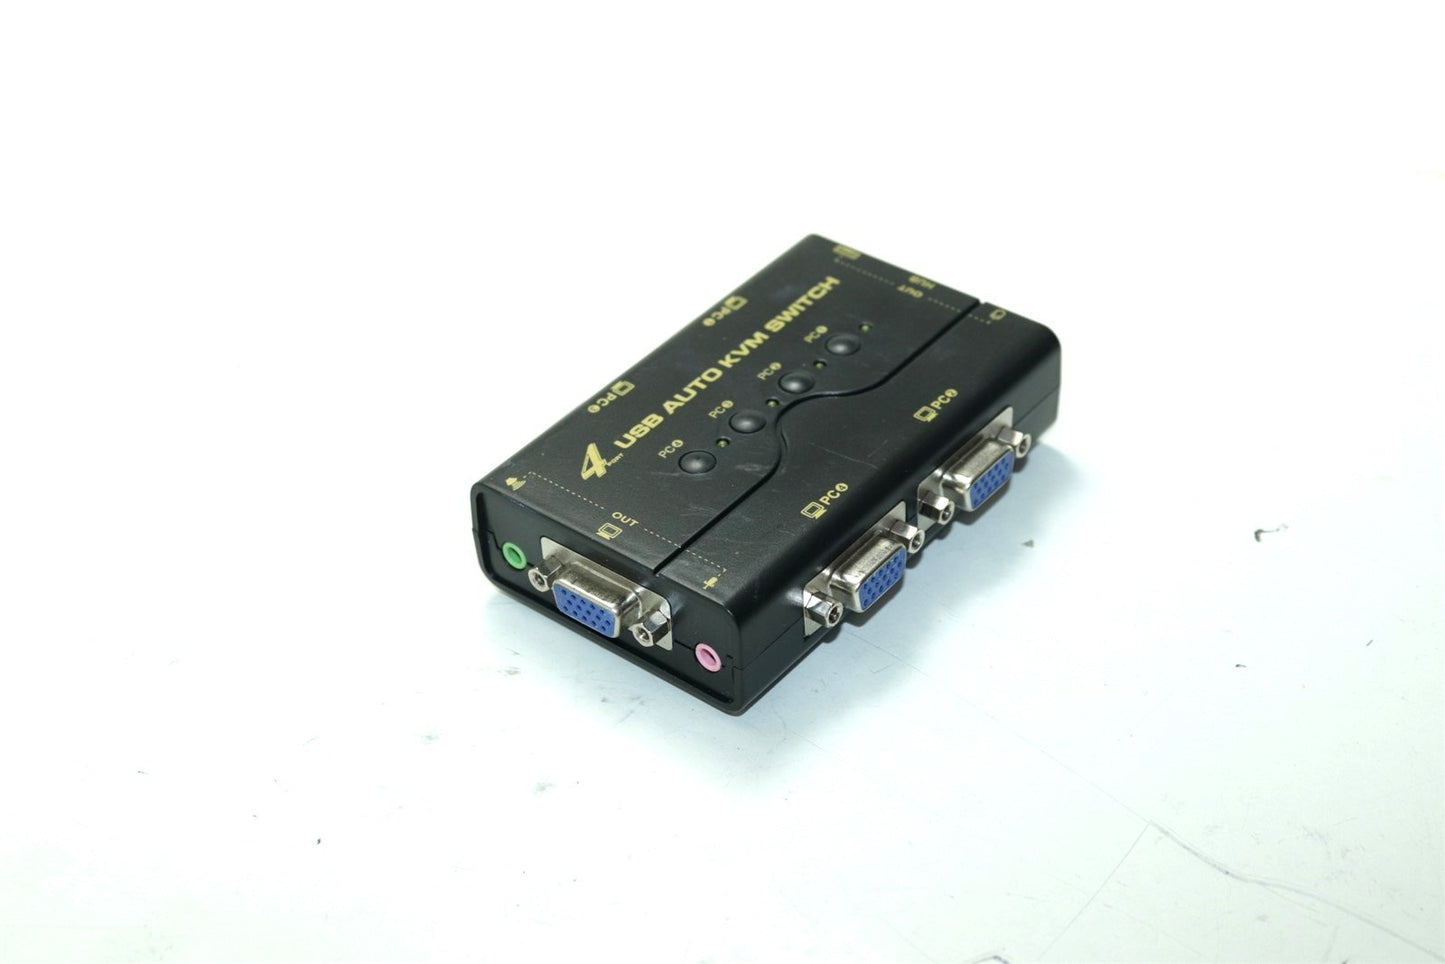 Lumenis Powersuite Laser Power Supply Interface Board Assy 0639-414-01 Rev D